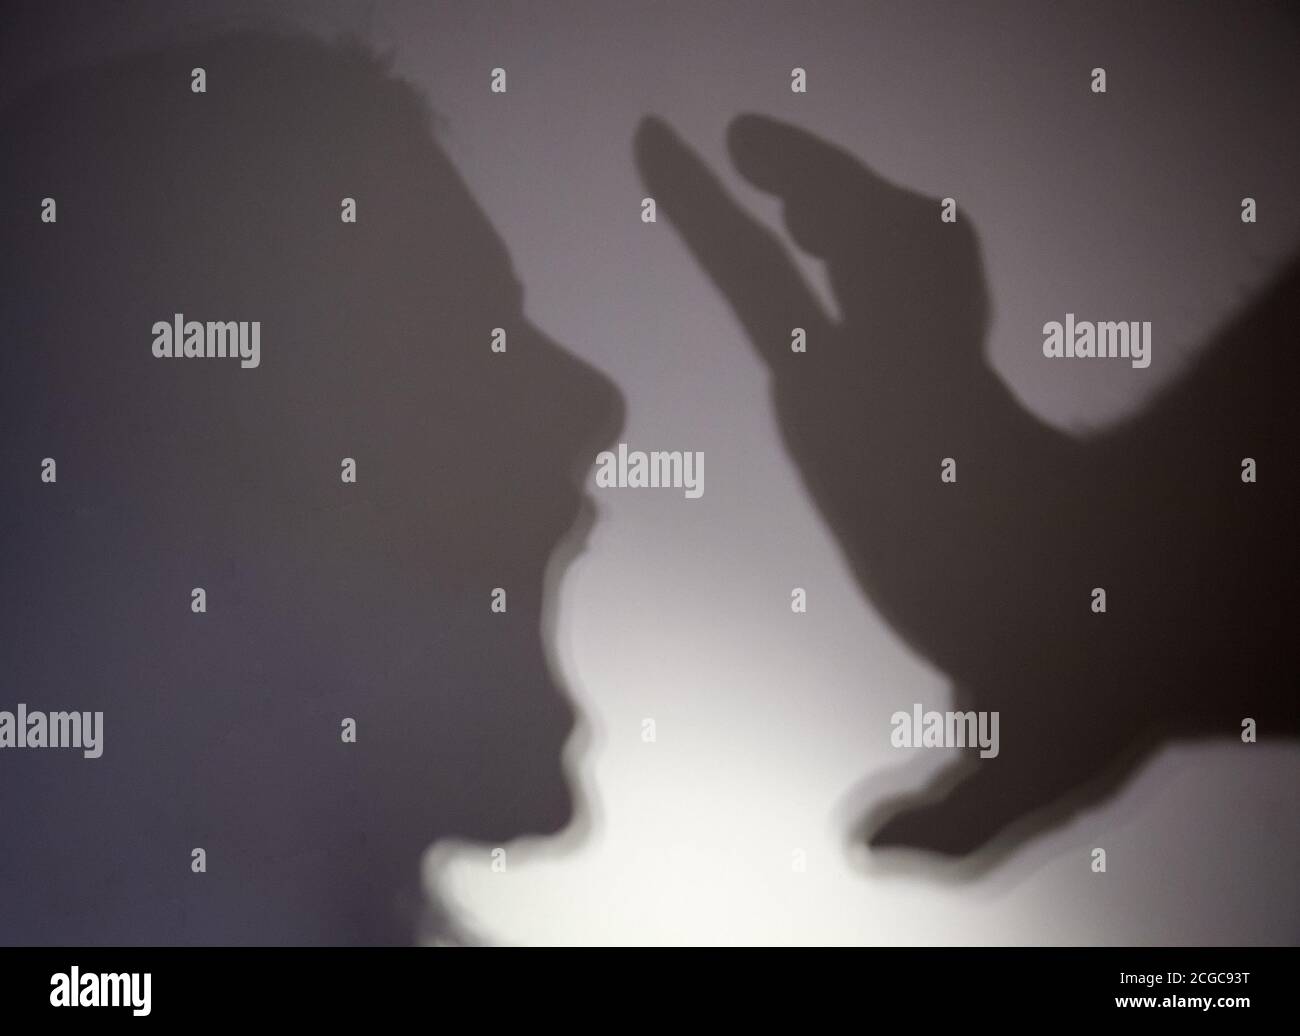 Shadows battered woman, gender violence and crime, symbol Stock Photo